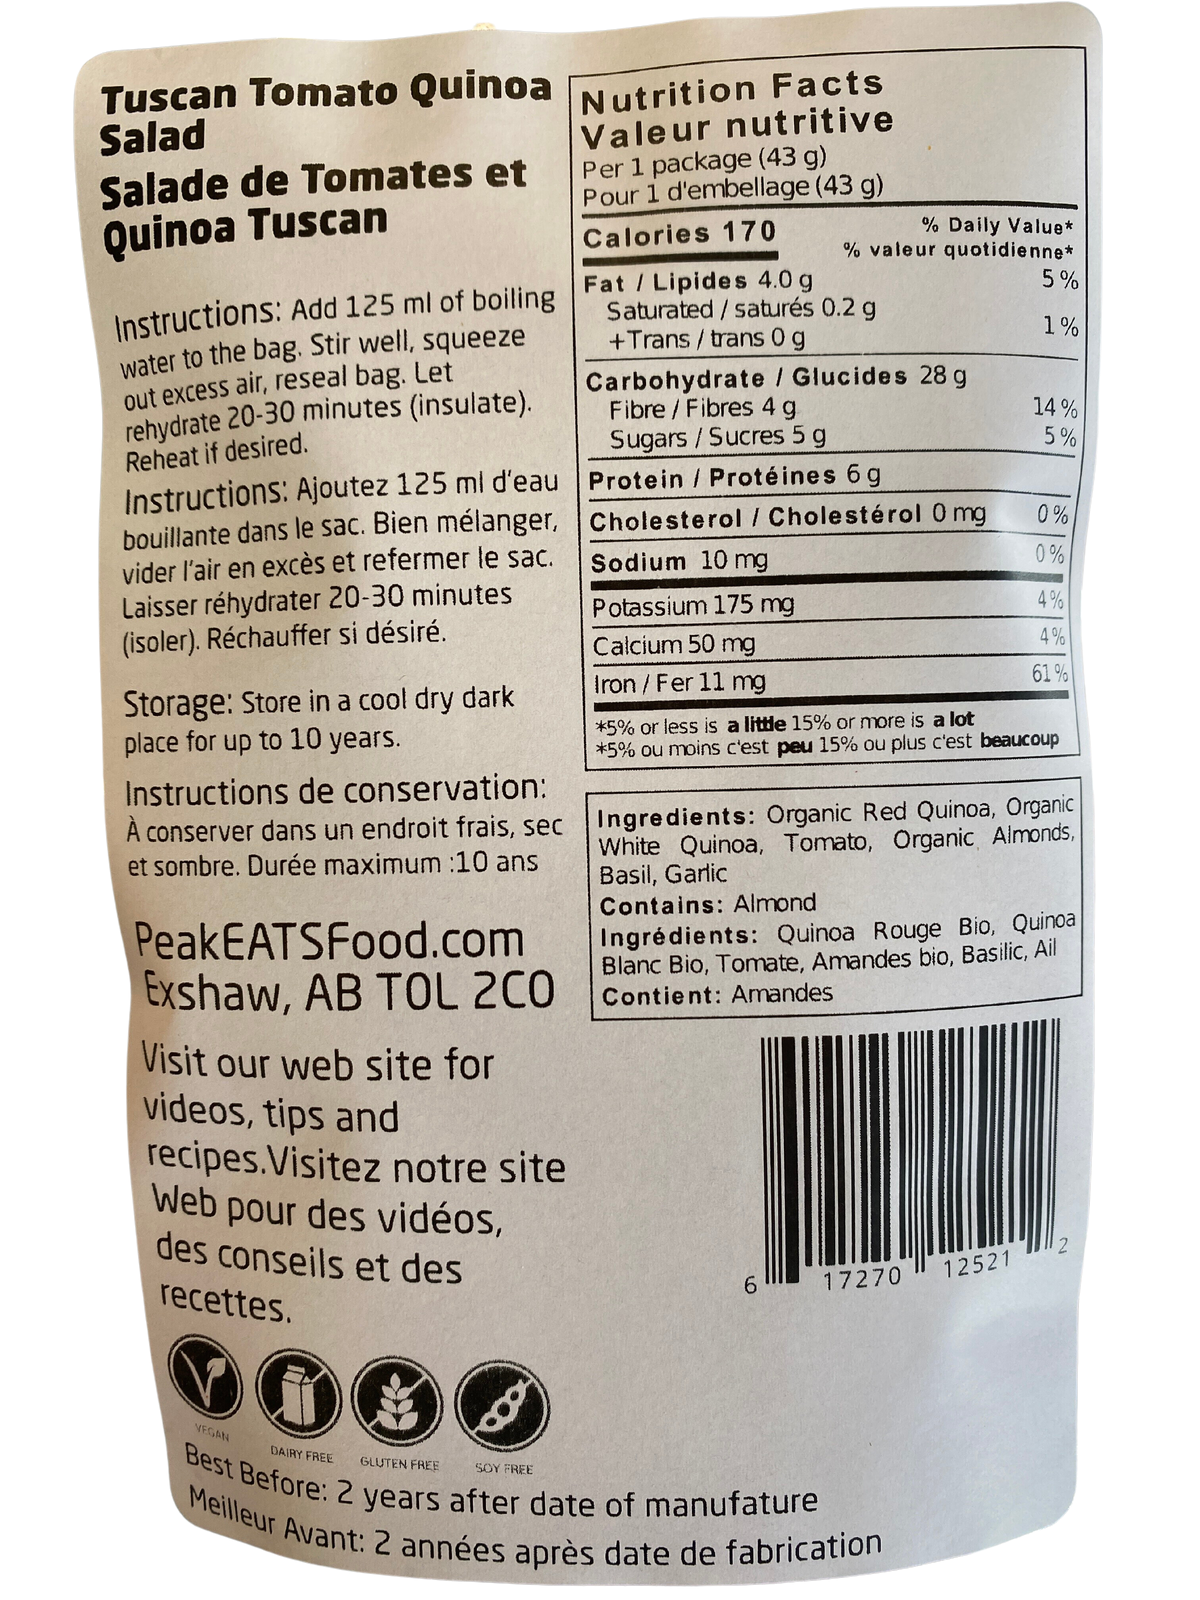 Peak Eats - Tuscan Tomato Quinoa Salad